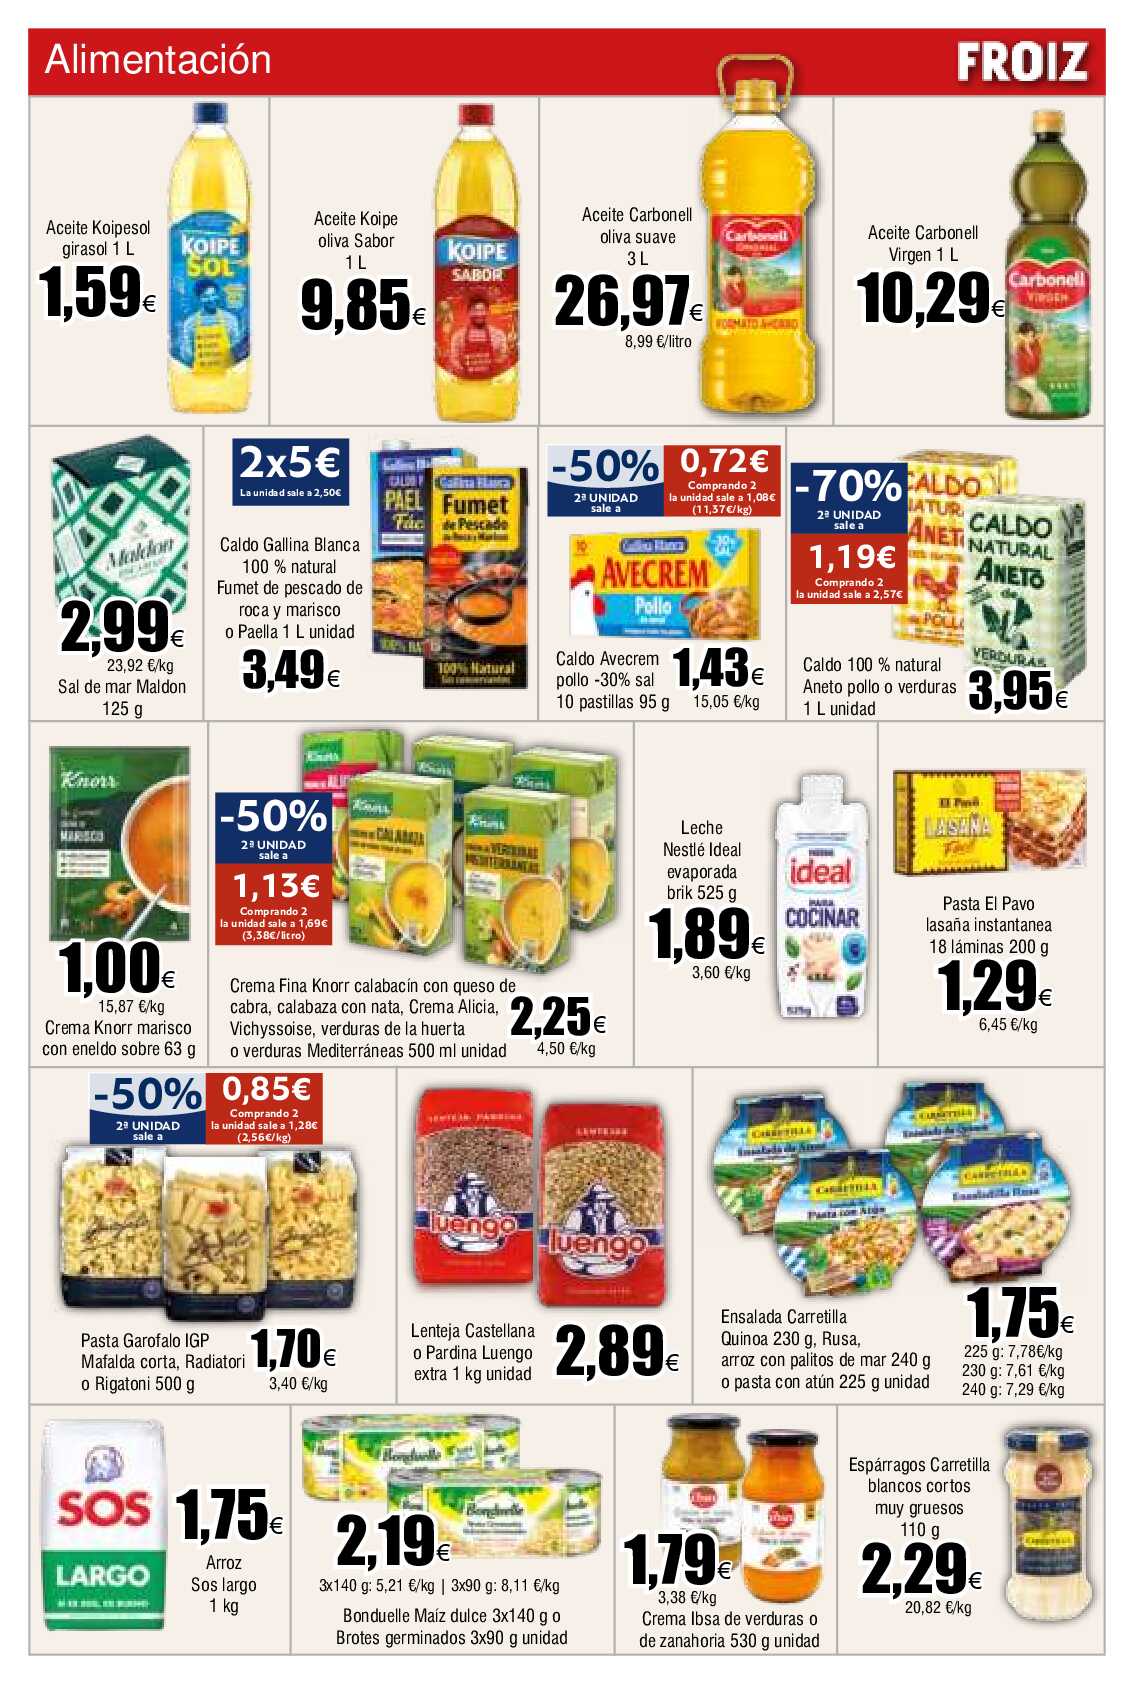 Ofertas supermercado Froiz. Página 10